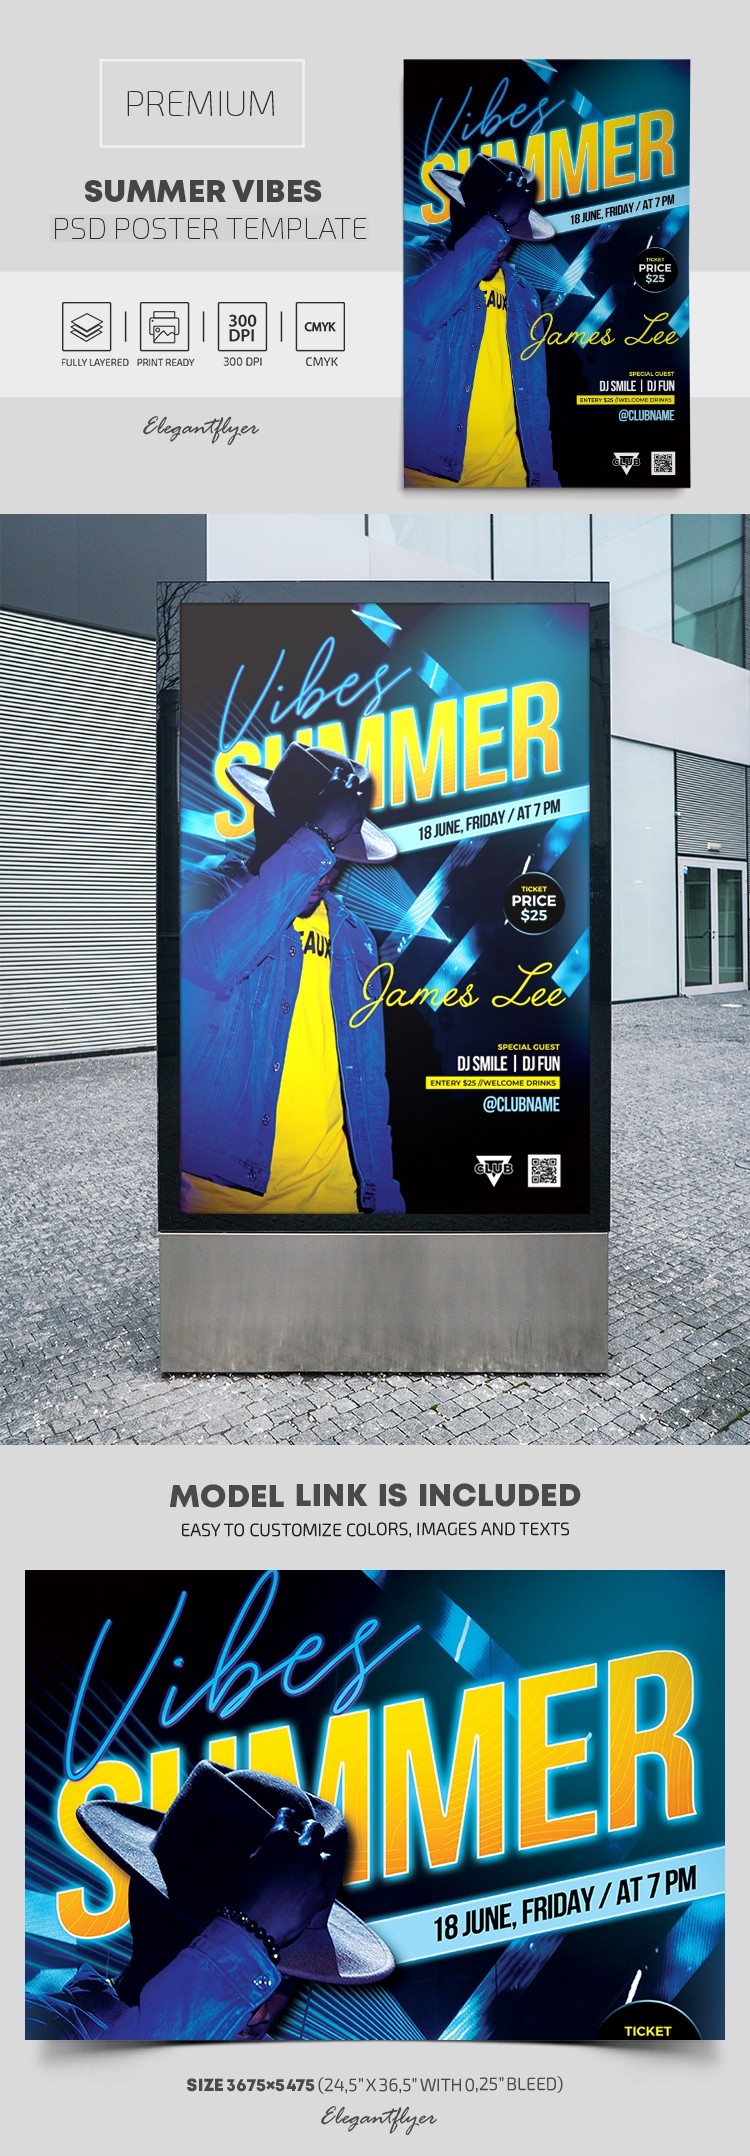 Summer Vibes Poster by ElegantFlyer